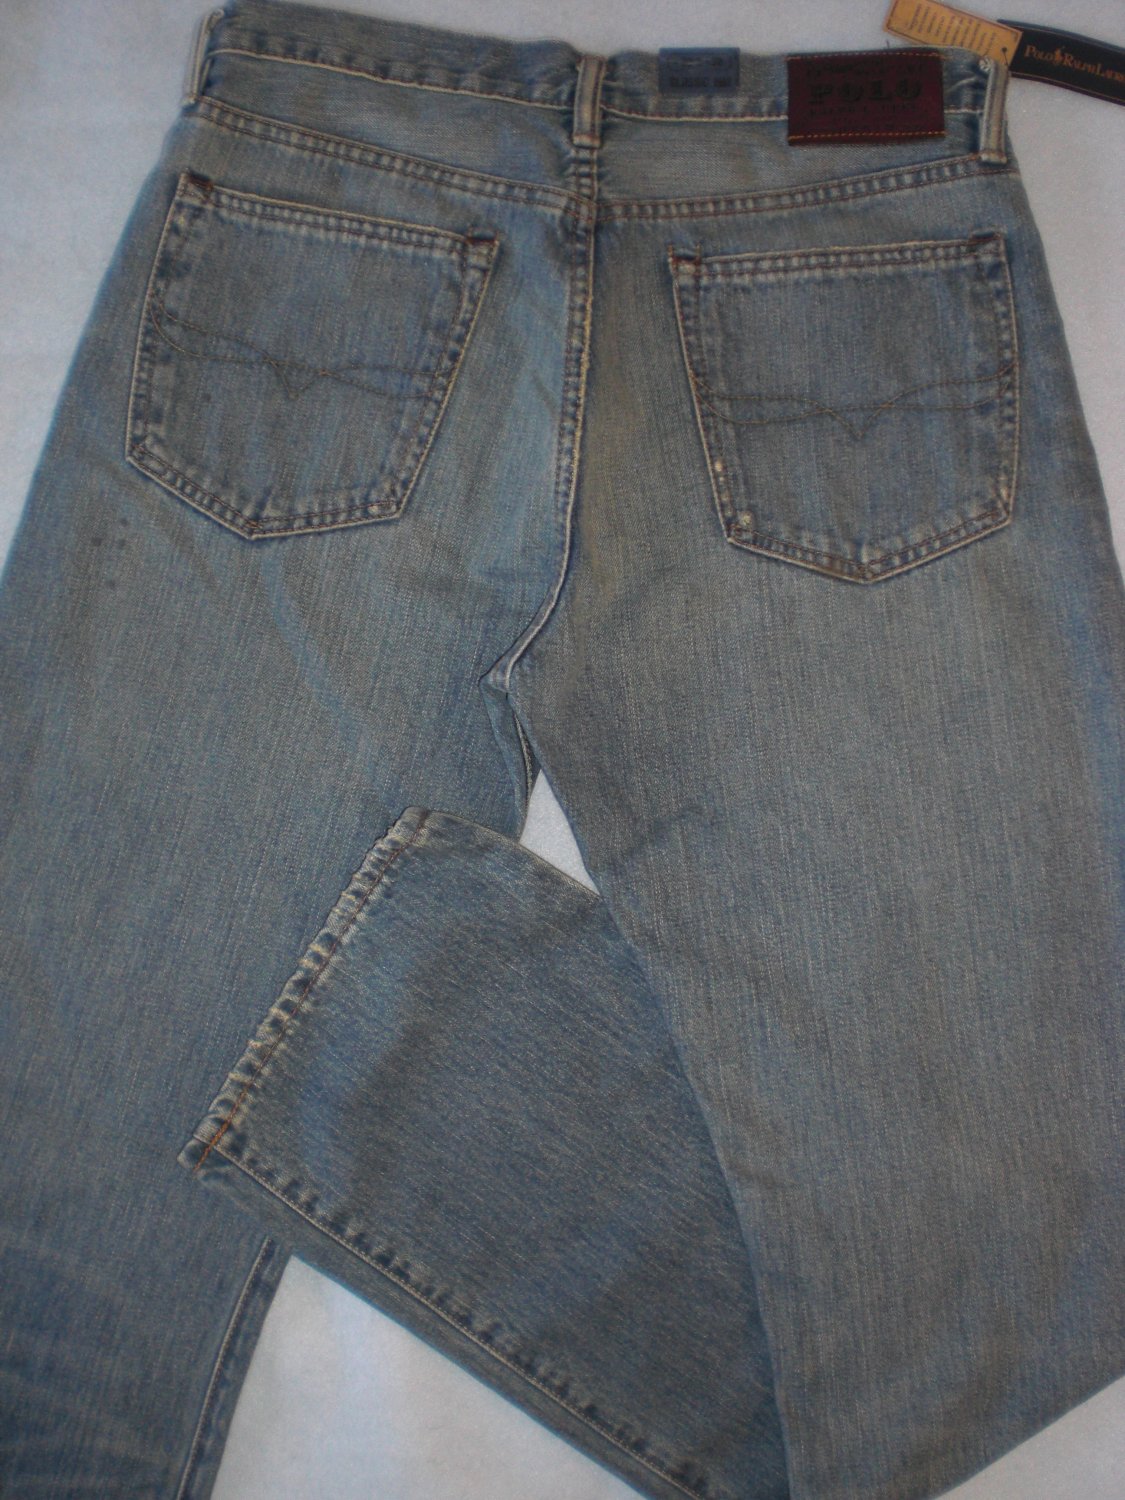 Polo Ralph Lauren Classic 867 Distressed jeans Paint Size 32x32 MSRP $98